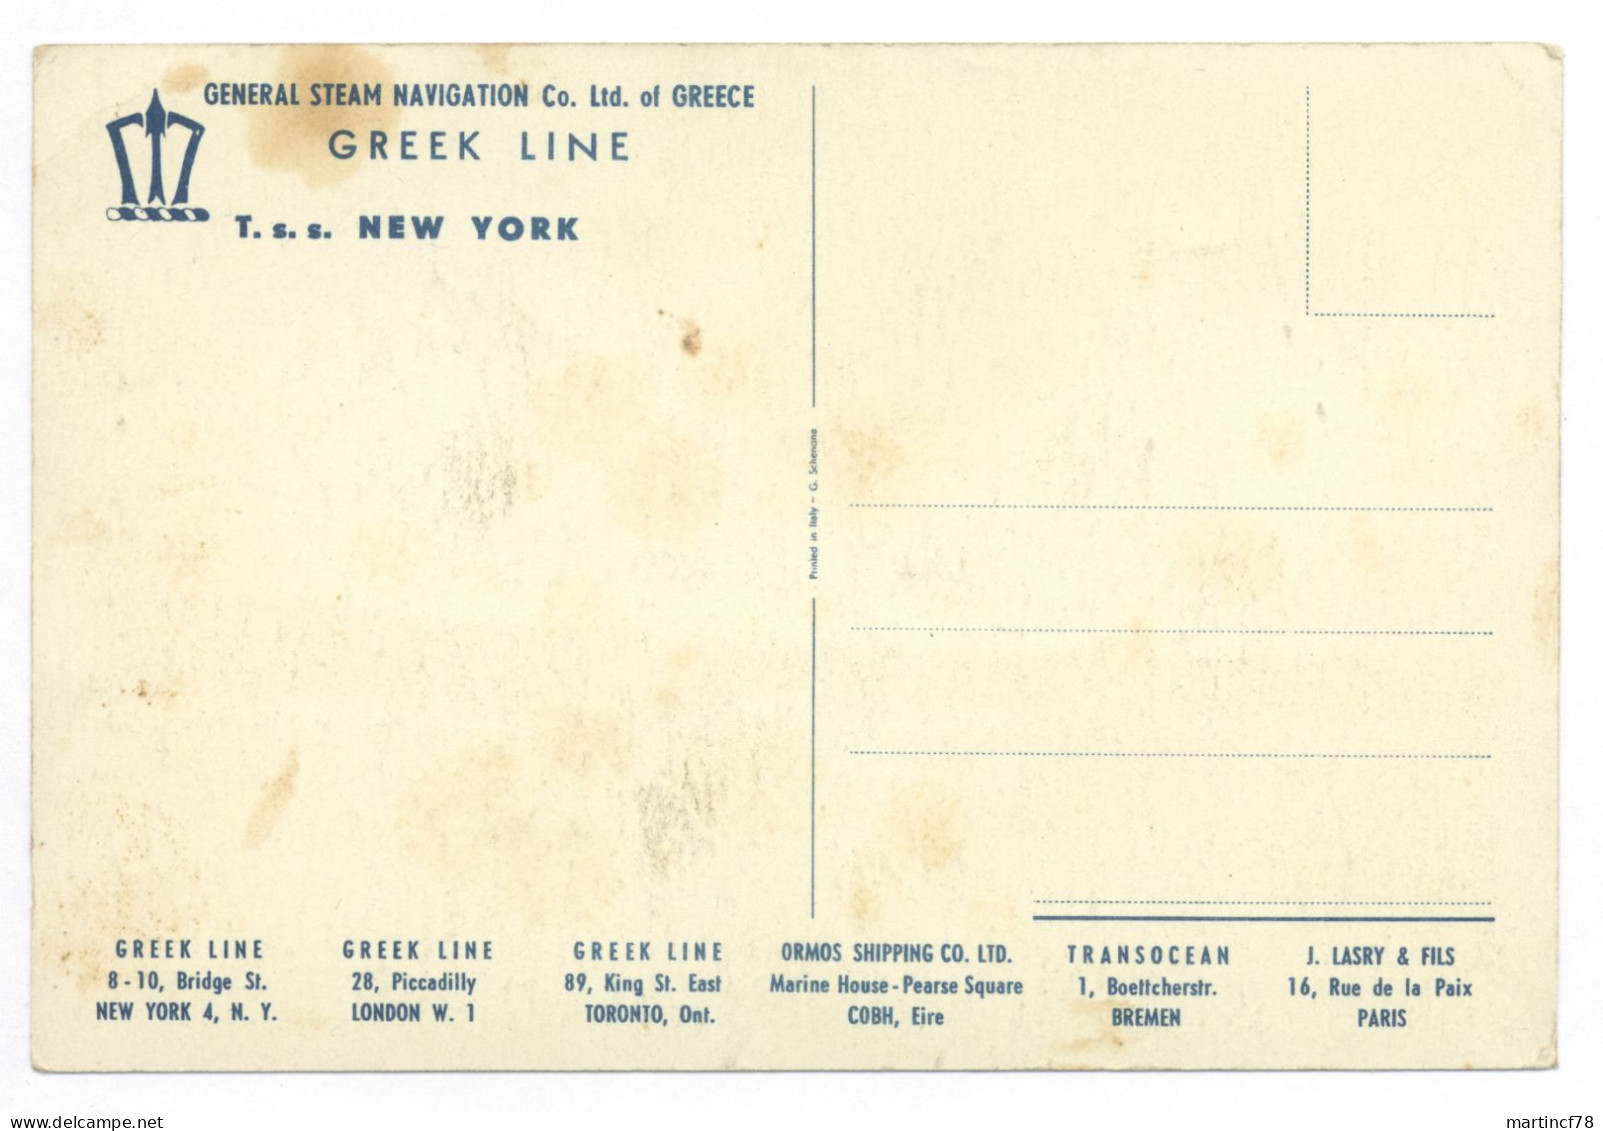 Greek Line T. S. S. New York General Steam Navigation Co. Ltd. Of Greece - Paquebote